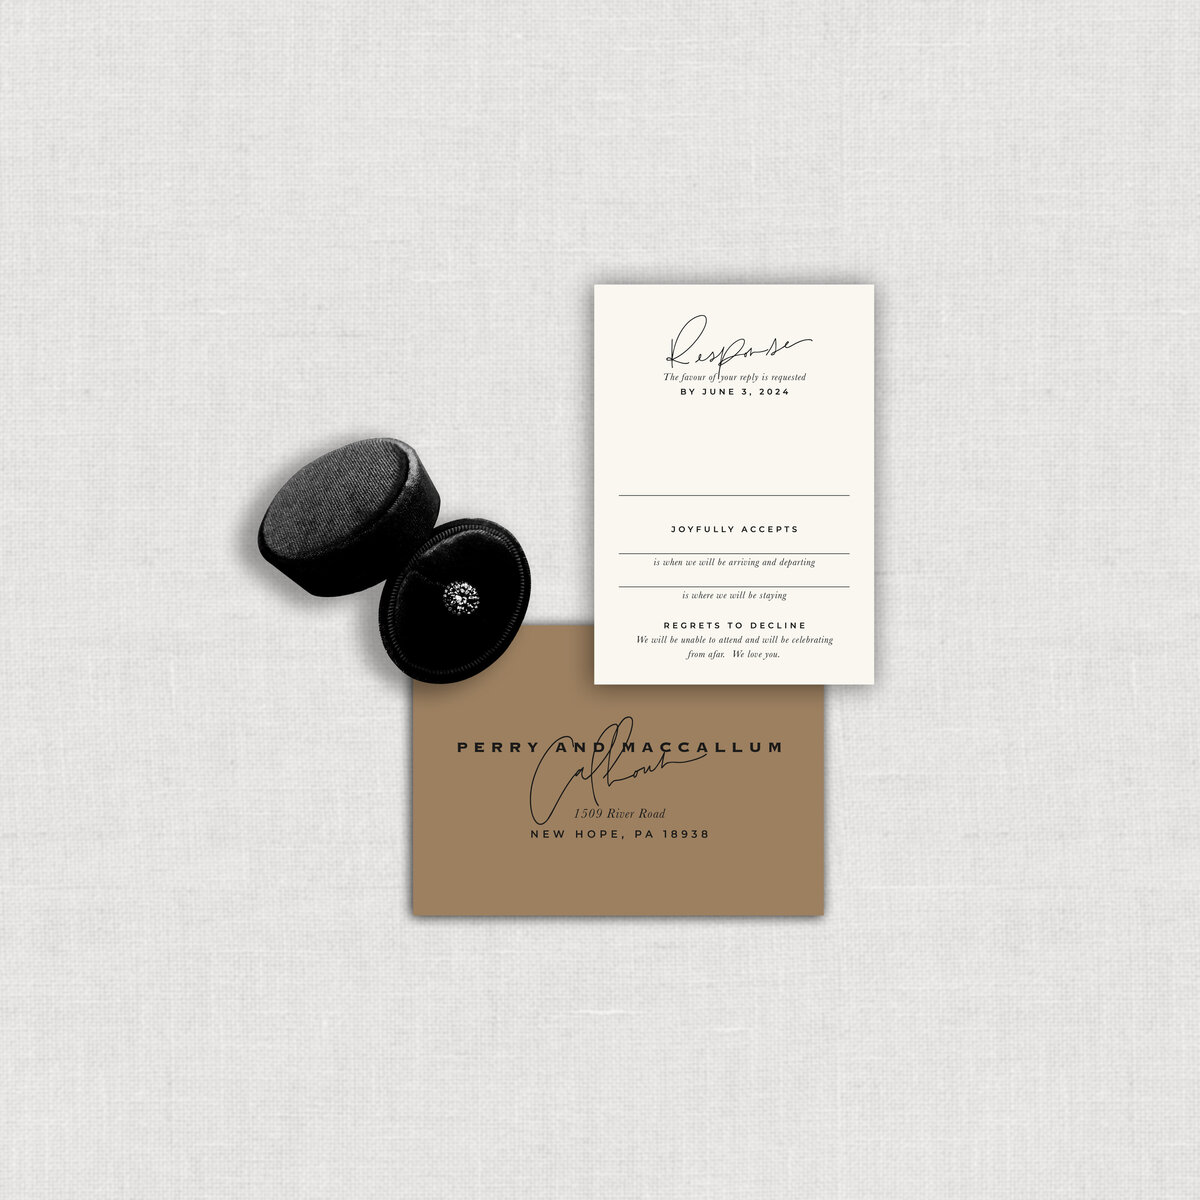 Scottish Wedding elopement rsvp calligraphy card with rsvp printed address tan envelope.